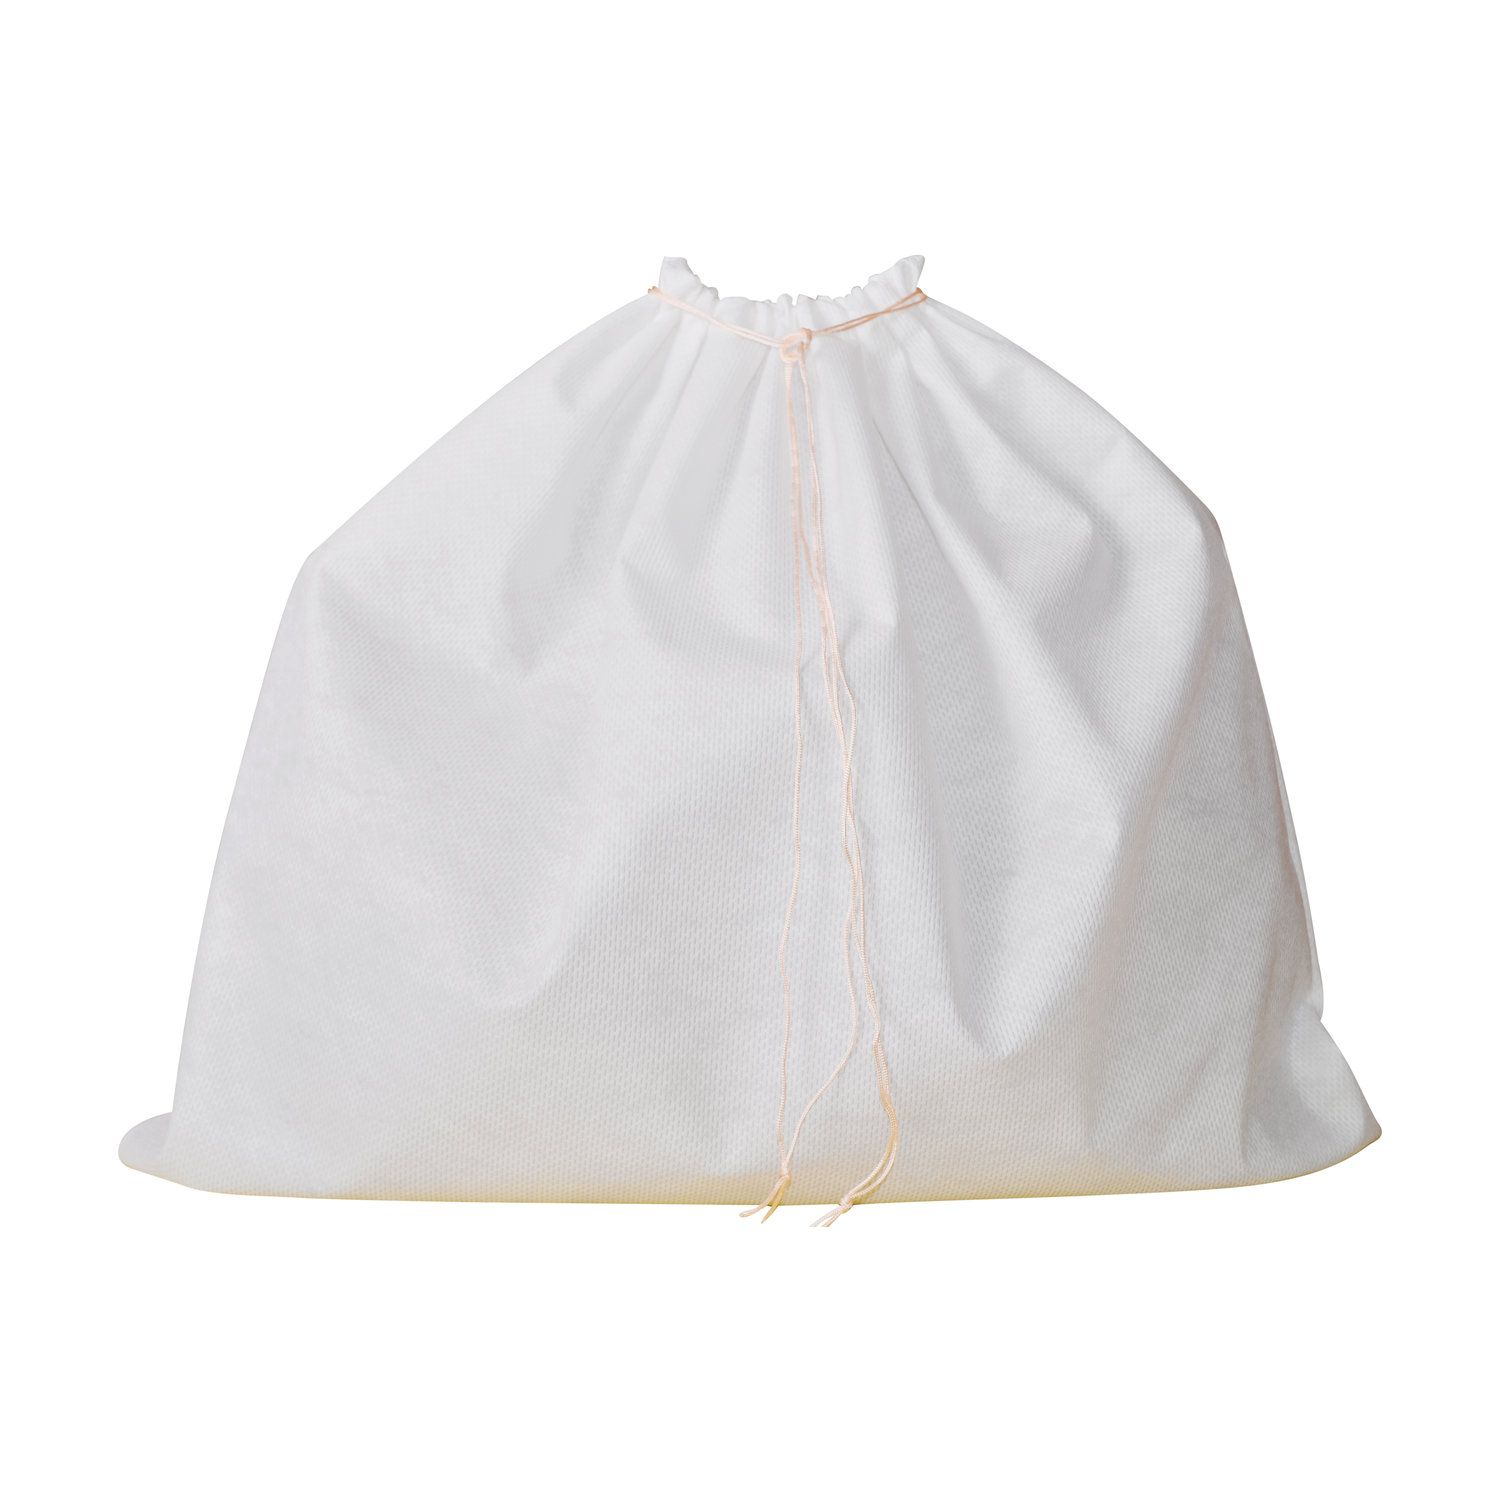 White Dust Bag for Handbags, Shoes, Belts, Gloves — Bags & Arts